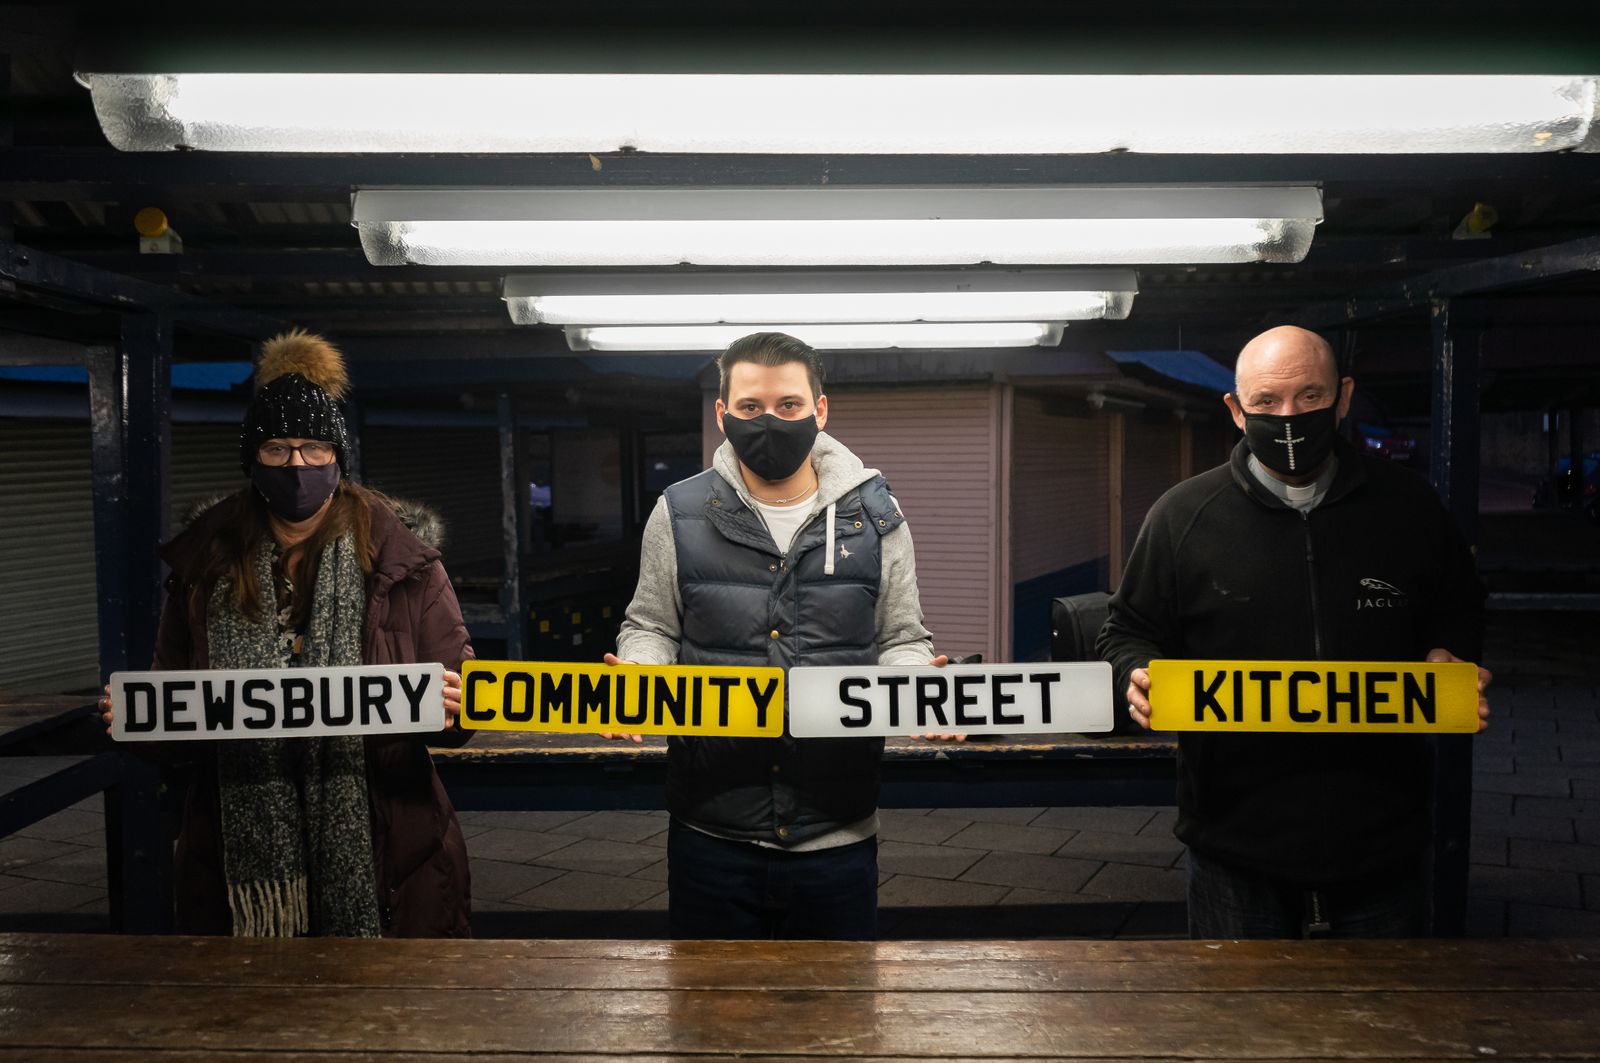 Dewsbury Community Street Kitchen welcomes new sponsor